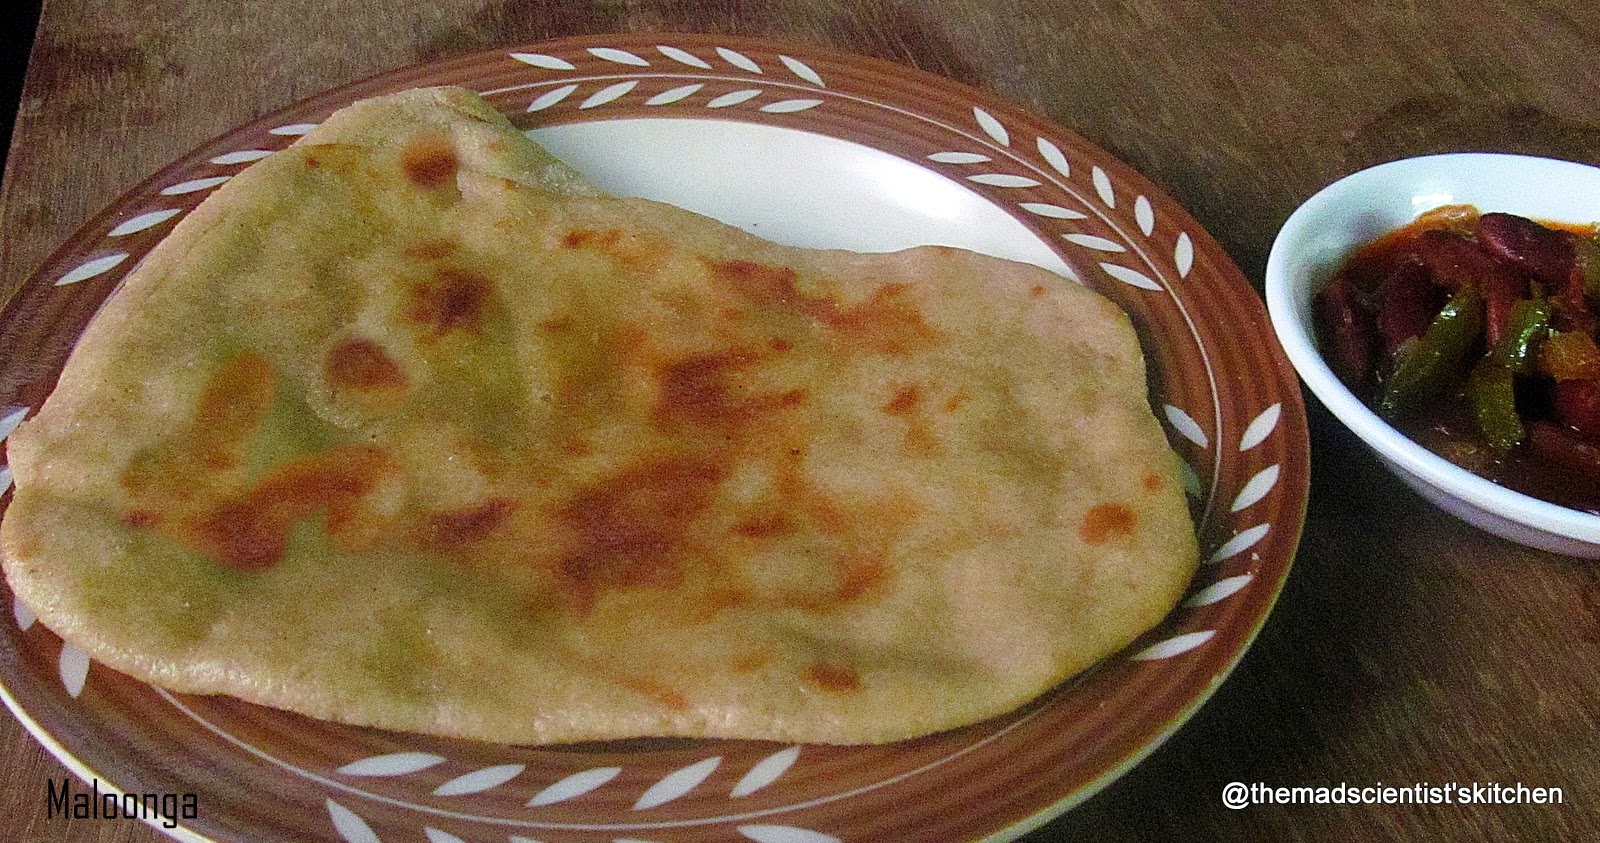 Maloonga ~A Flat Bread From Yemen